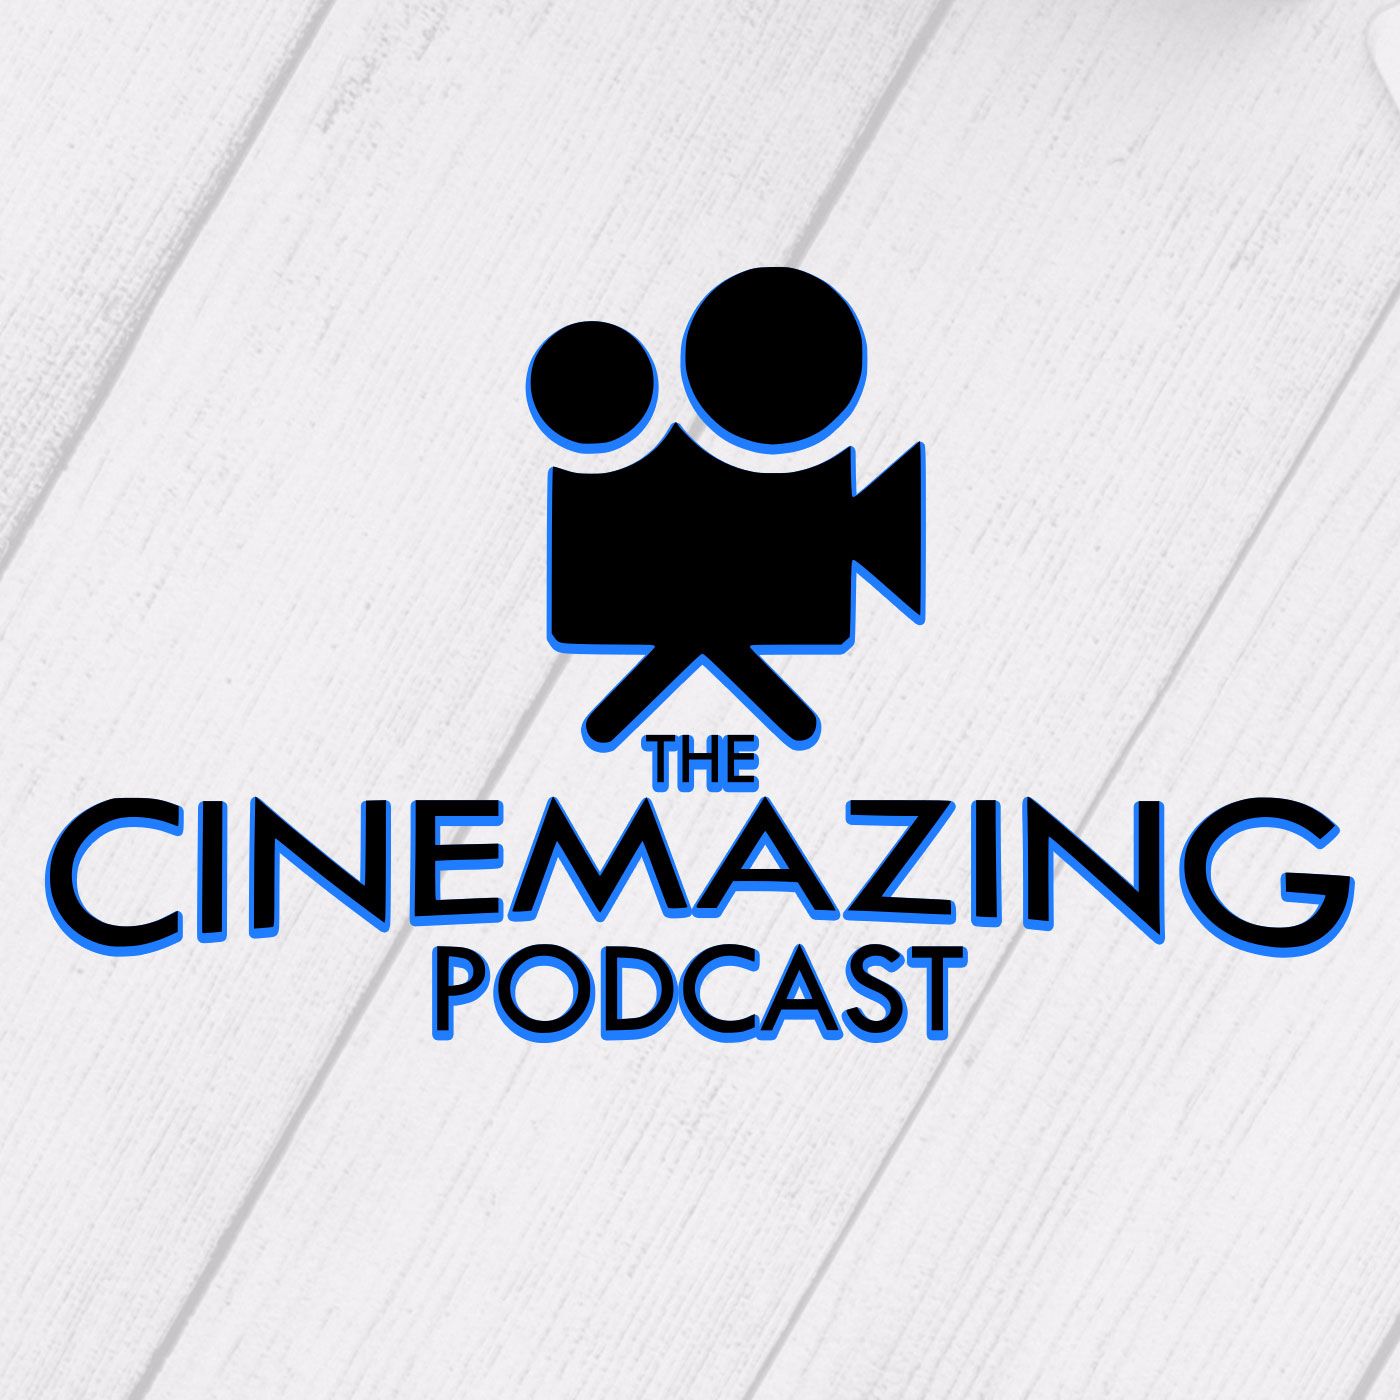 The Cinemazing Podcast